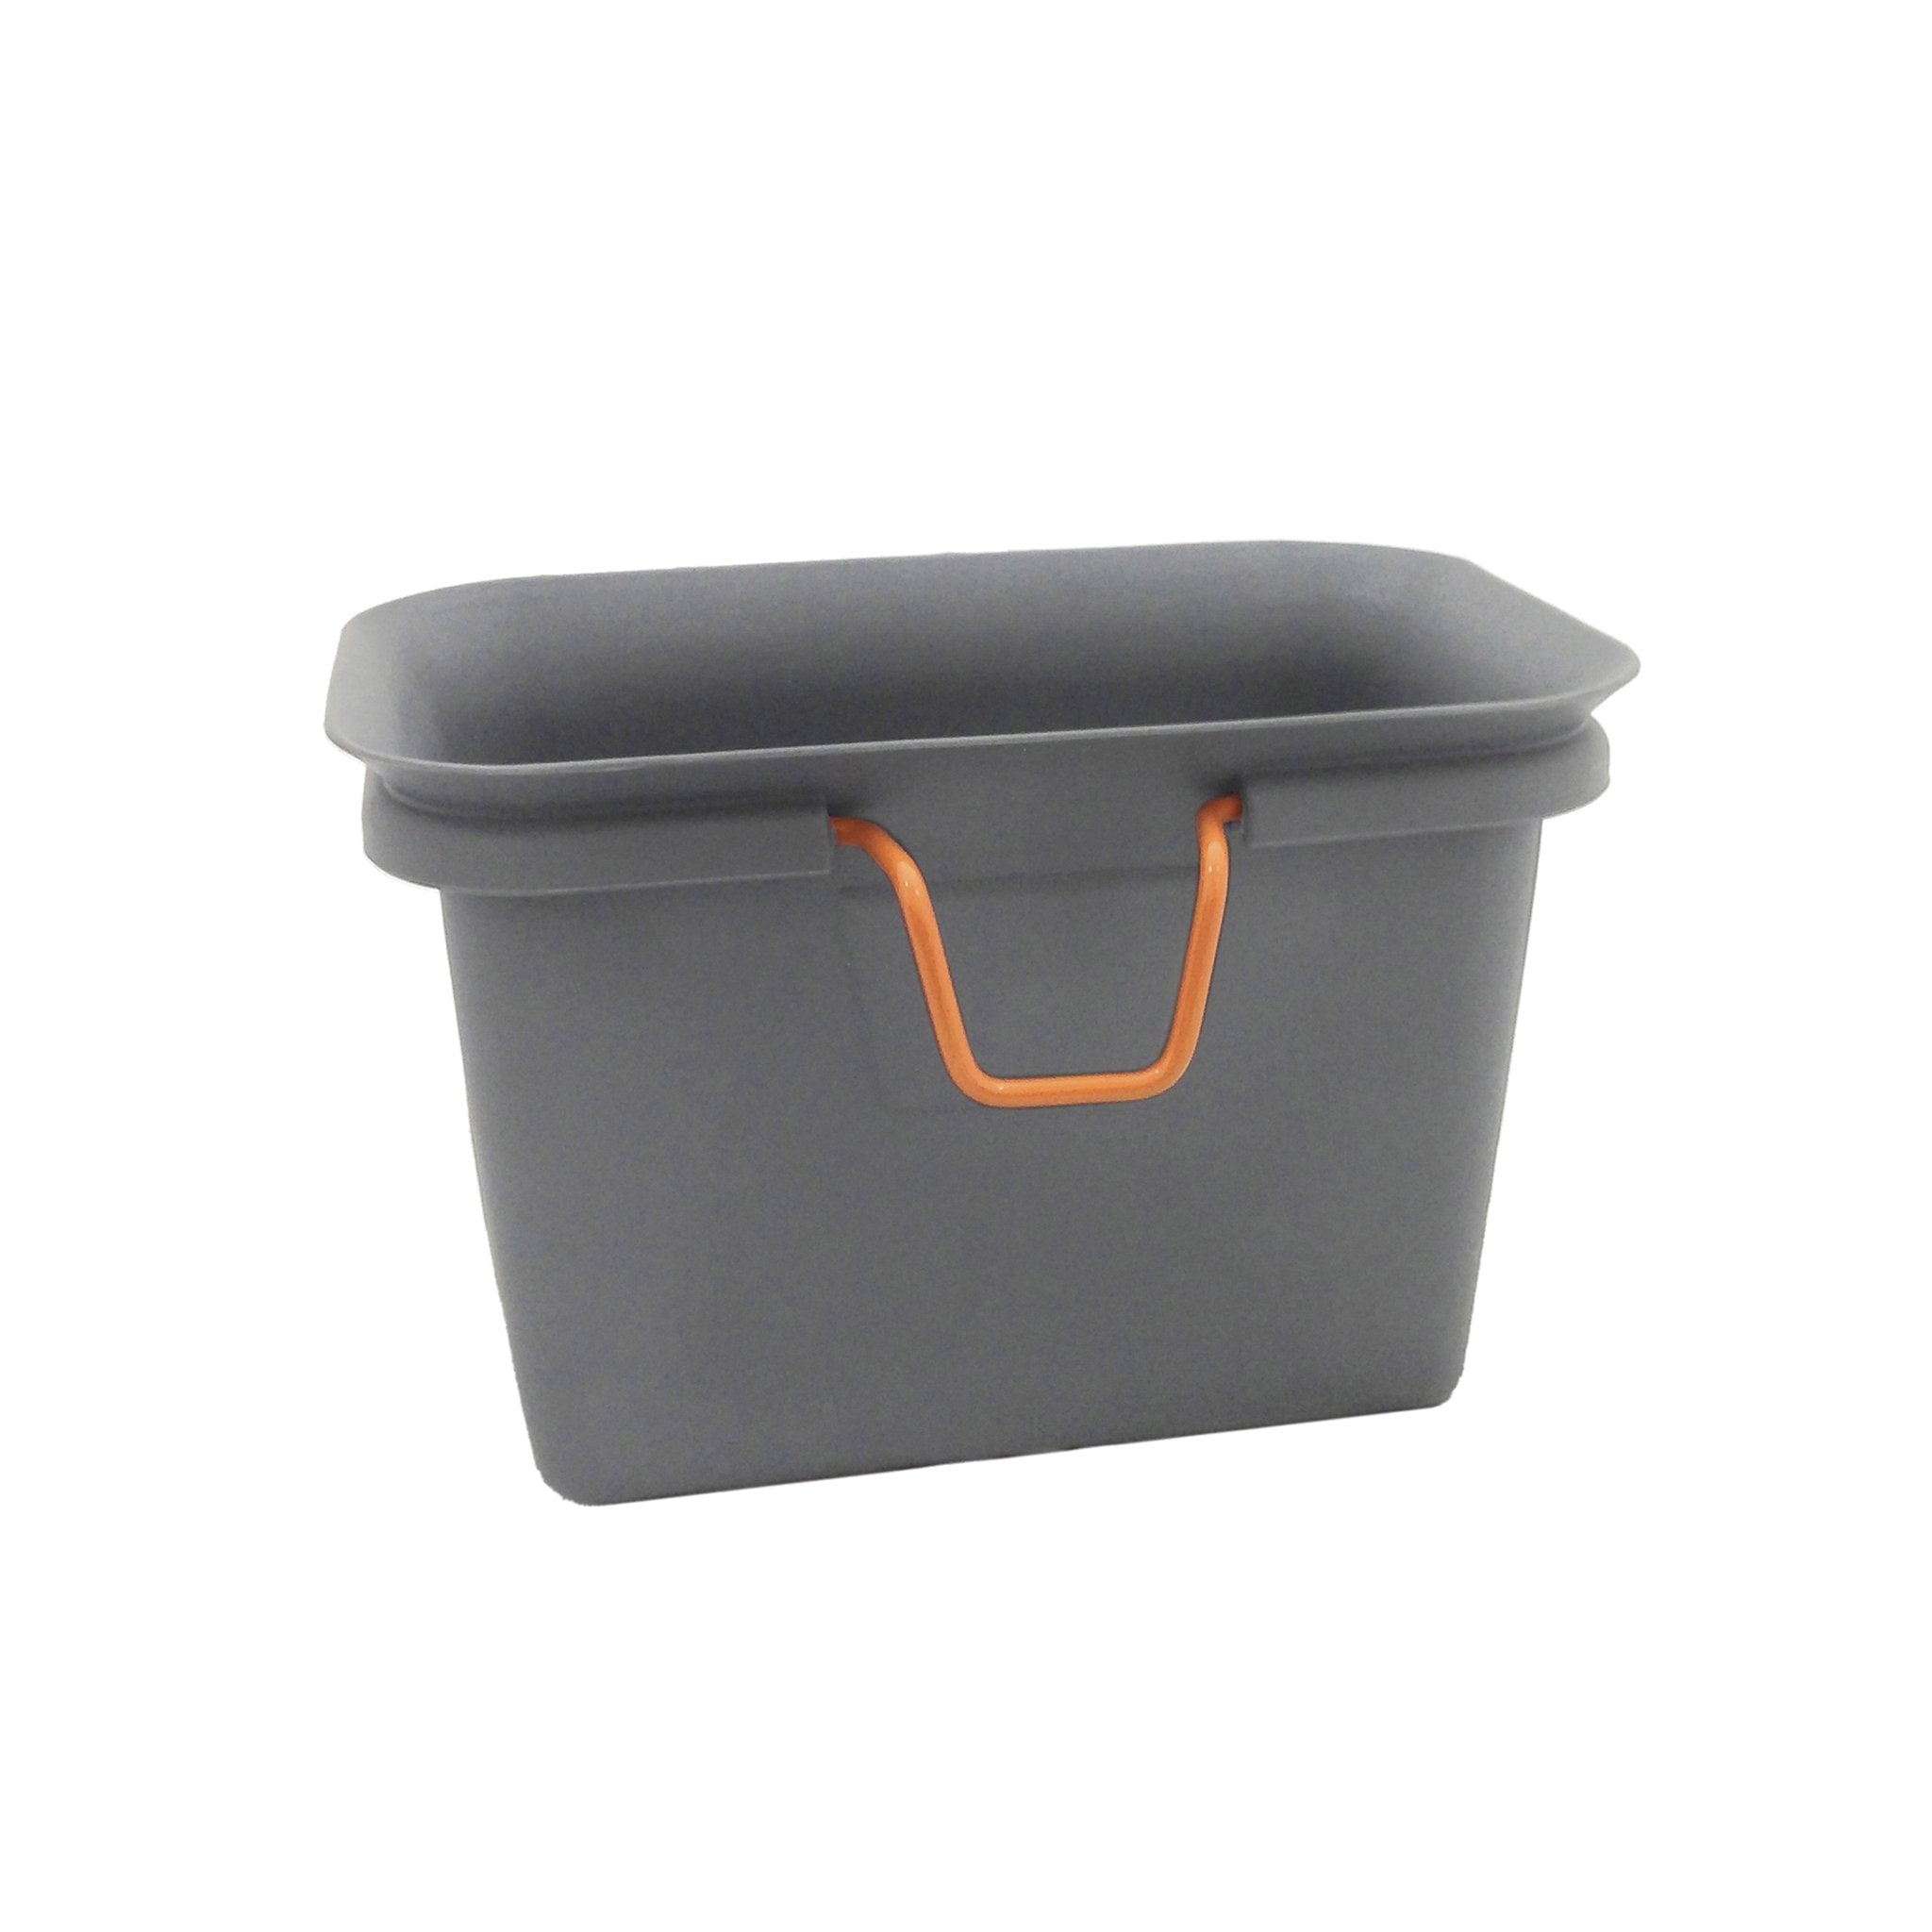 SHCKE Compost Bin Stainless Steel Kitchen Compost Bucket for